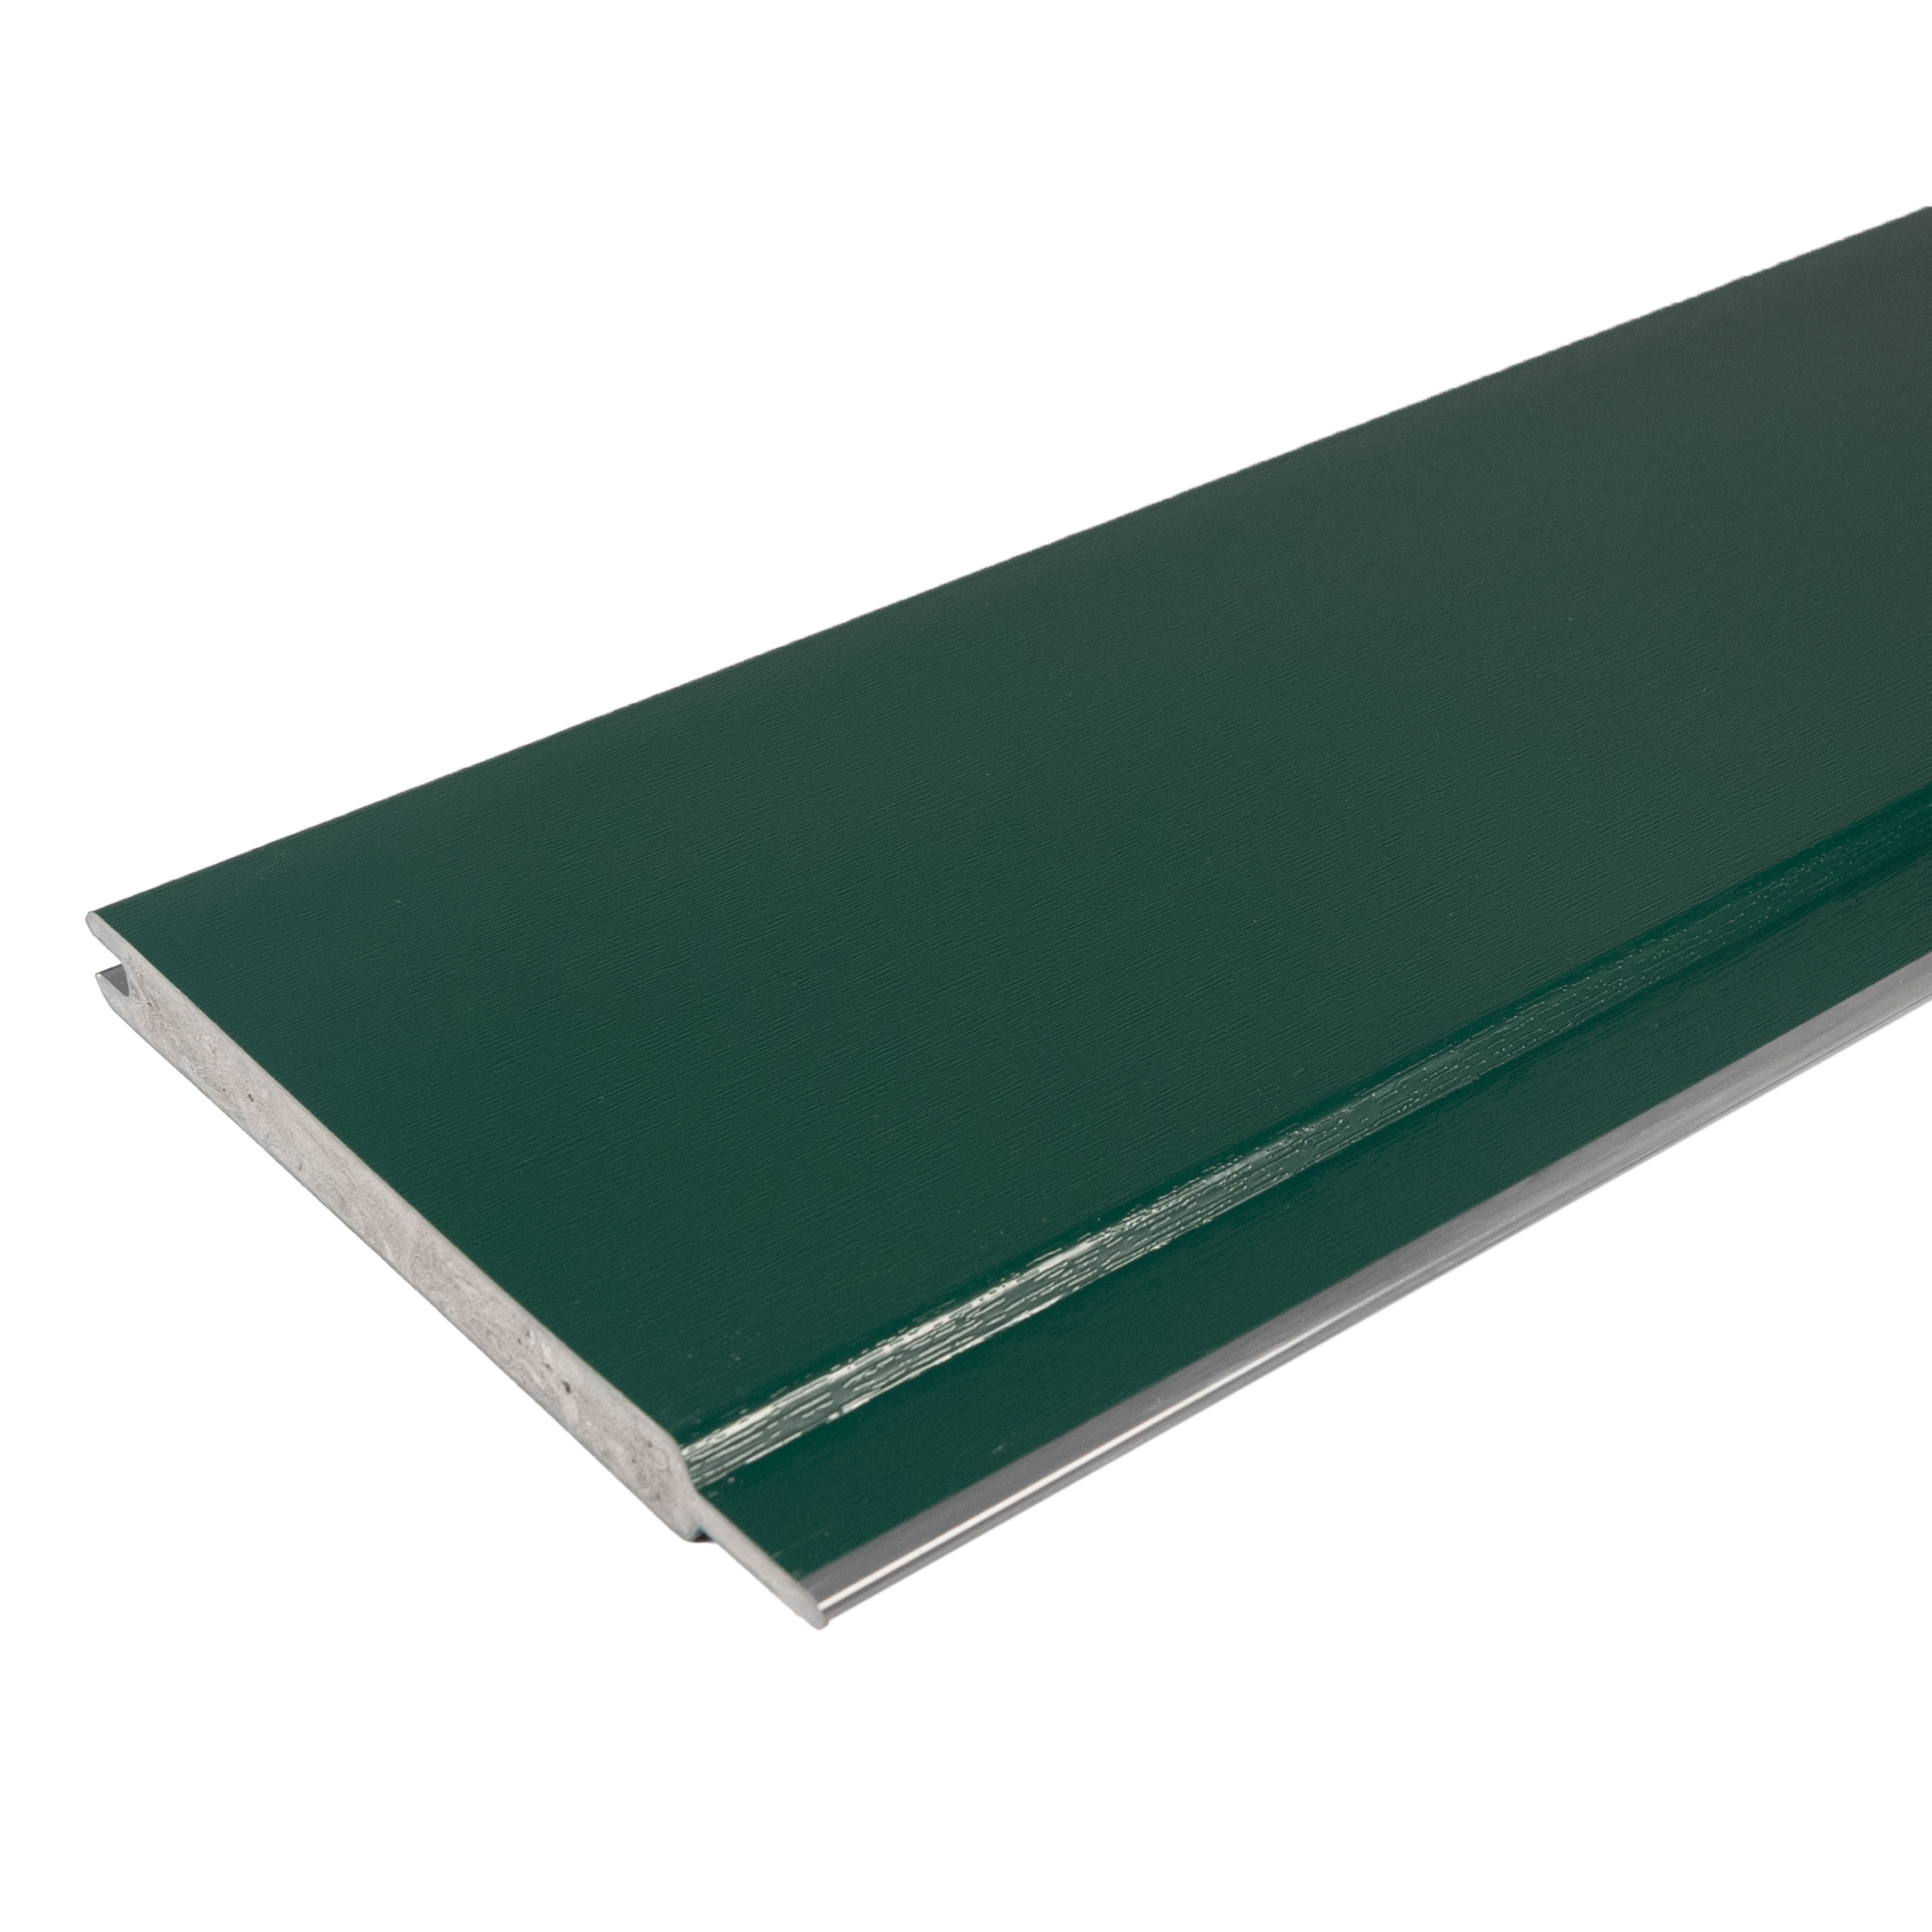 Torfüllung Kunststoff Moosgrün ähnl. RAL 6005 - Massiv Kunststoffbretter für Tore, Türen & Zäune 143 x 15 mm 